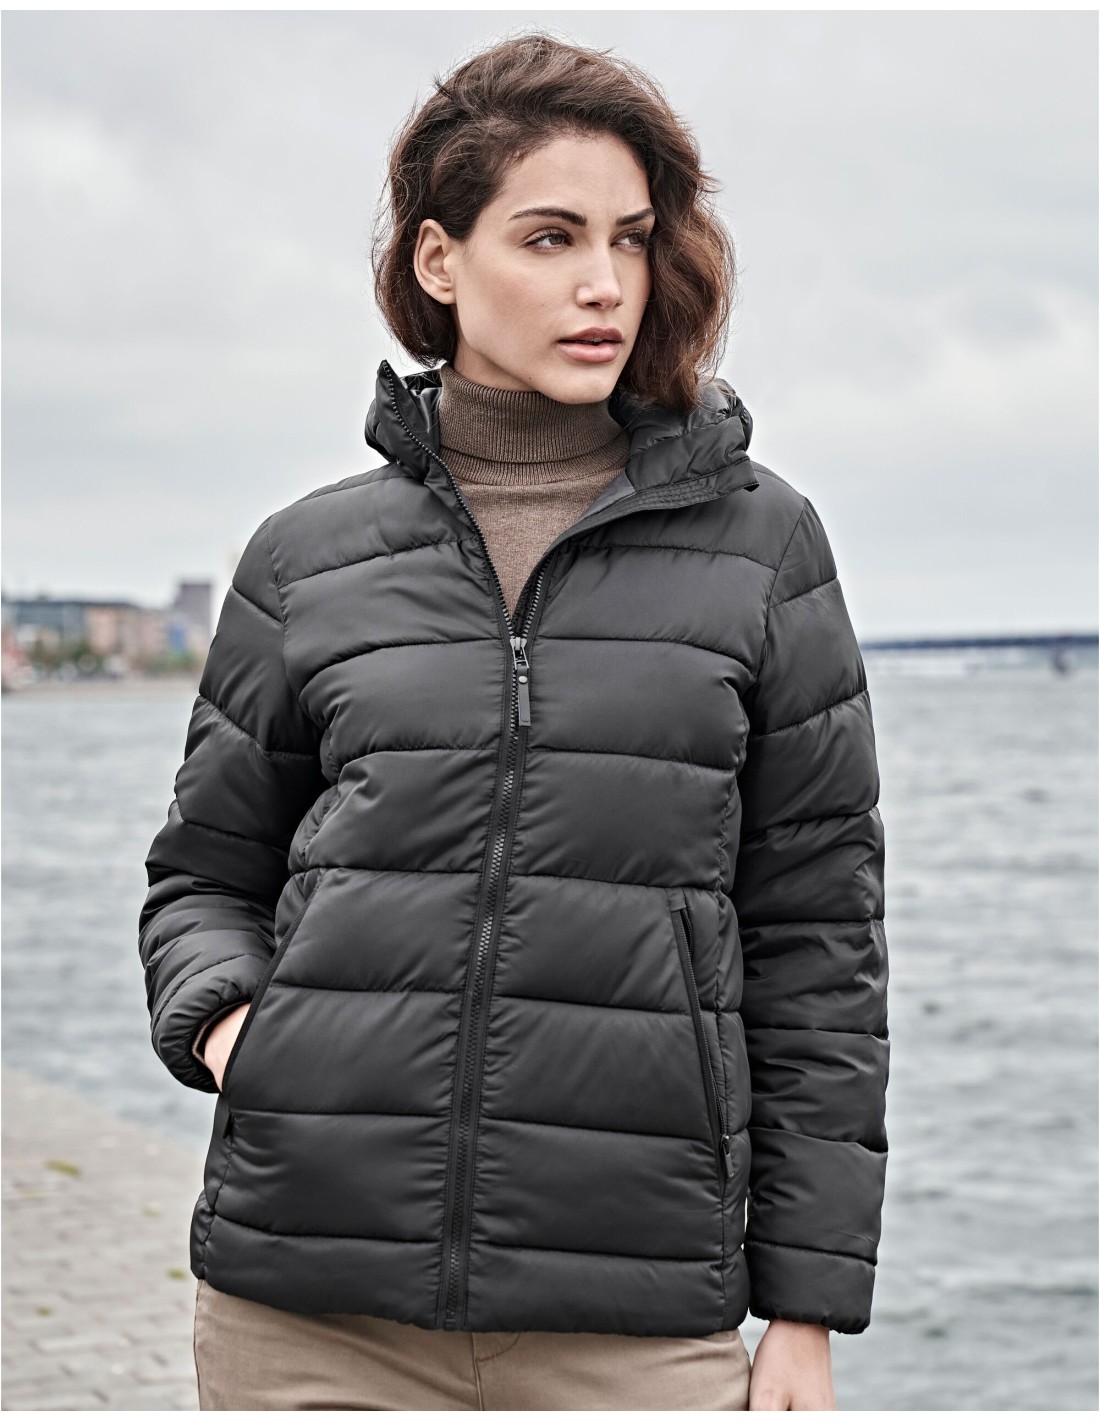 Oversized Hooded Jacket - Dark gray - Ladies | H&M US